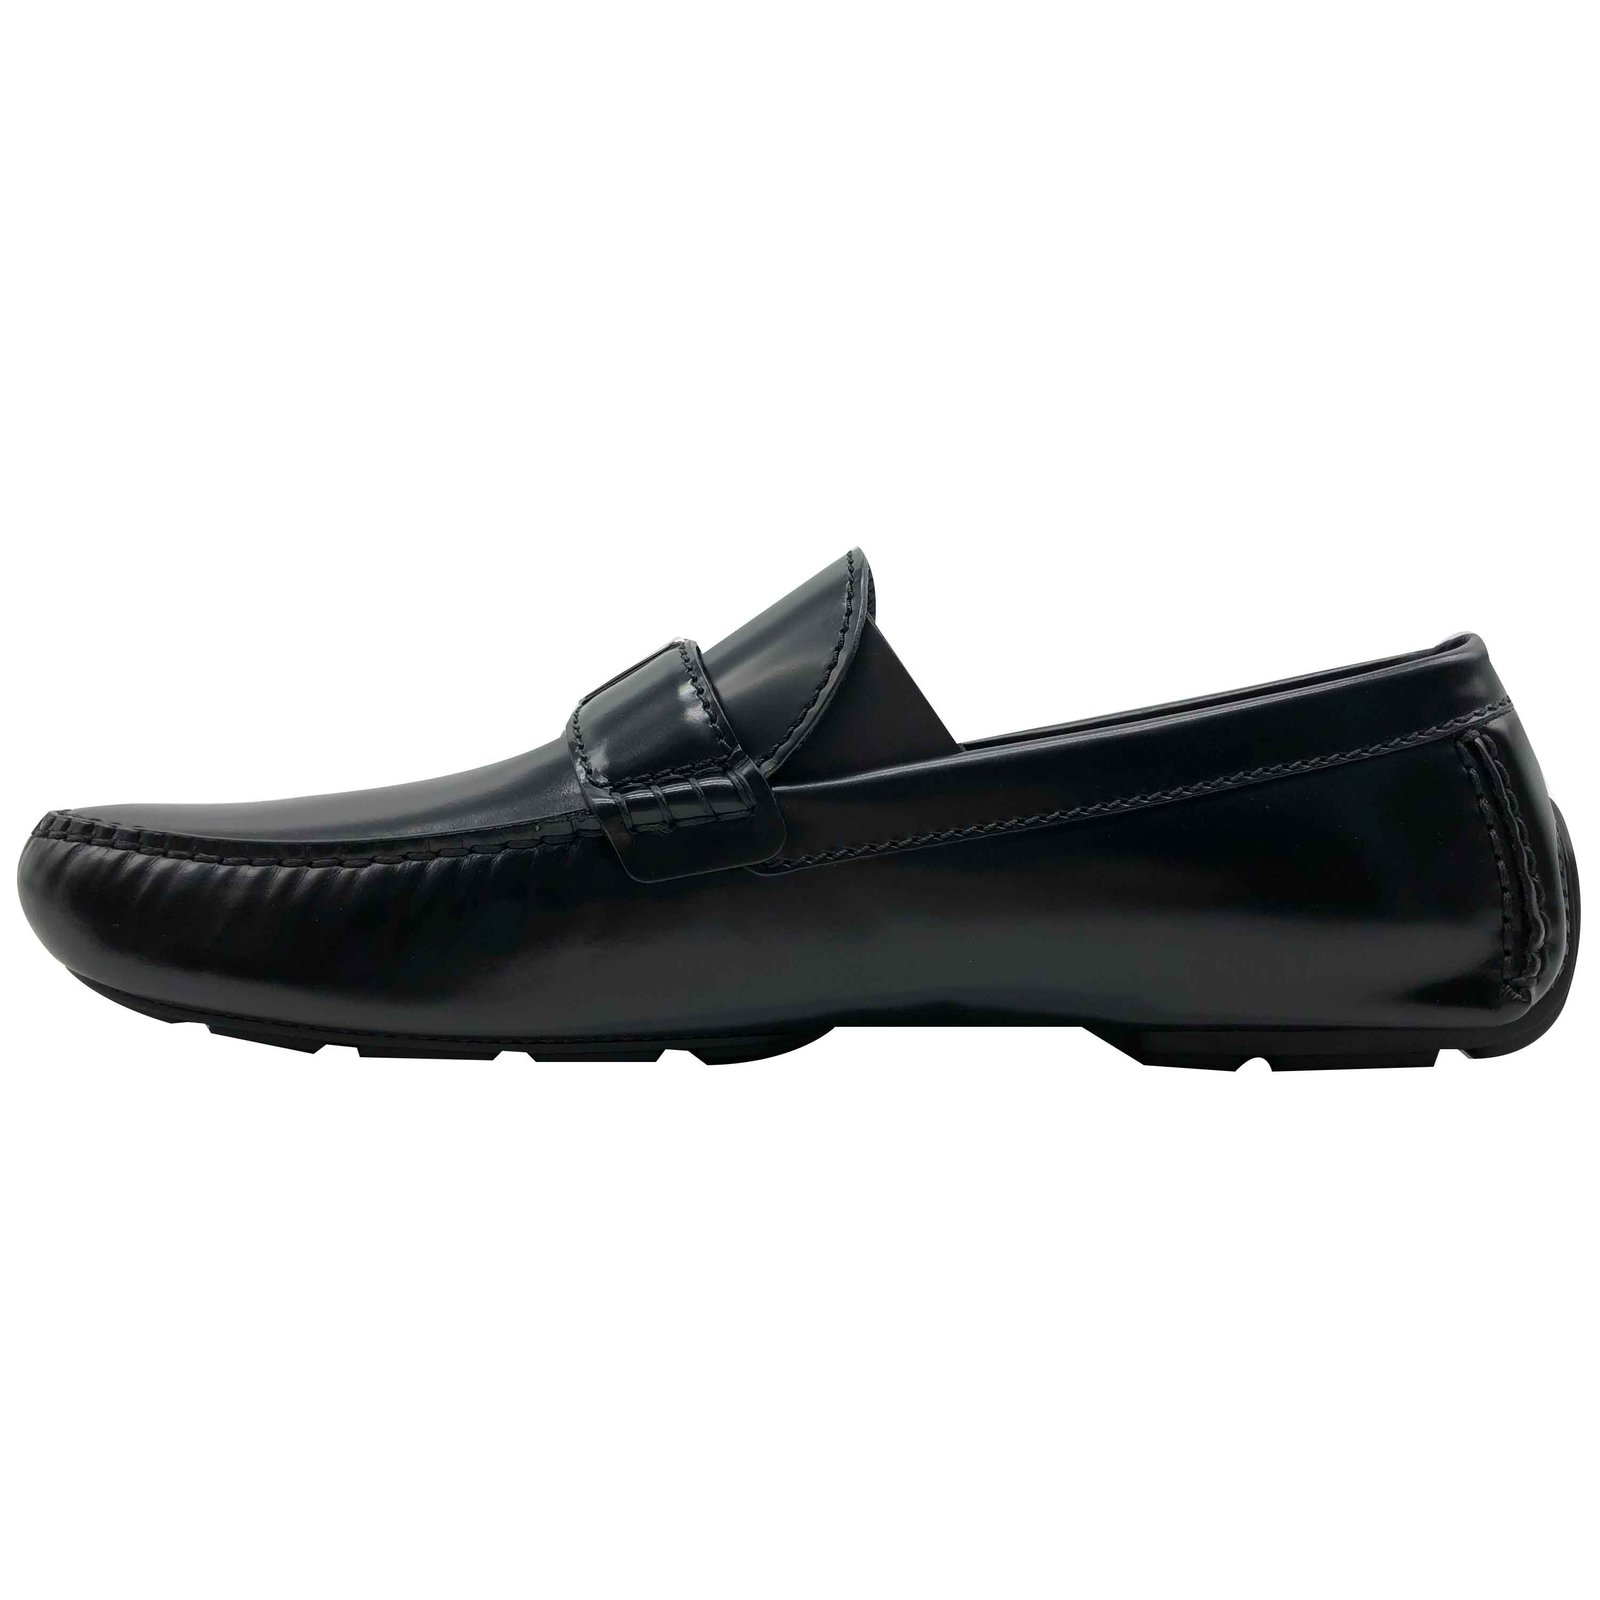 Louis Vuitton men Loafers in black leather // Model: RaceTrack car